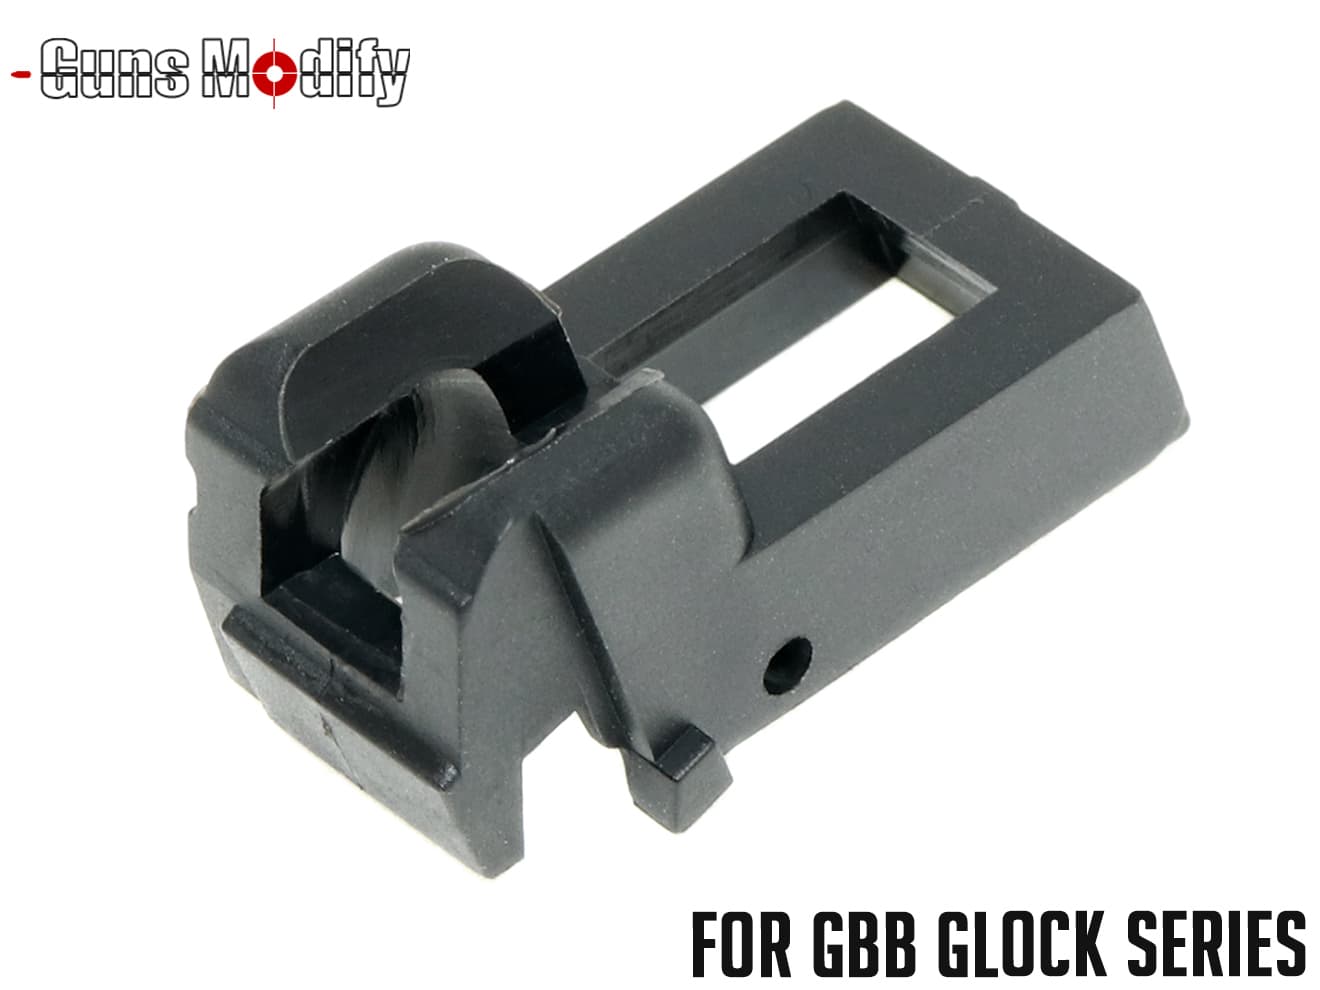 GUNS MODIFY ハイテナシティ マガジンリップ for TM GLOCKシリーズ 東京マルイ GBB グロック対応 靭性に優れた特殊ポリマー採用 耐久性UP